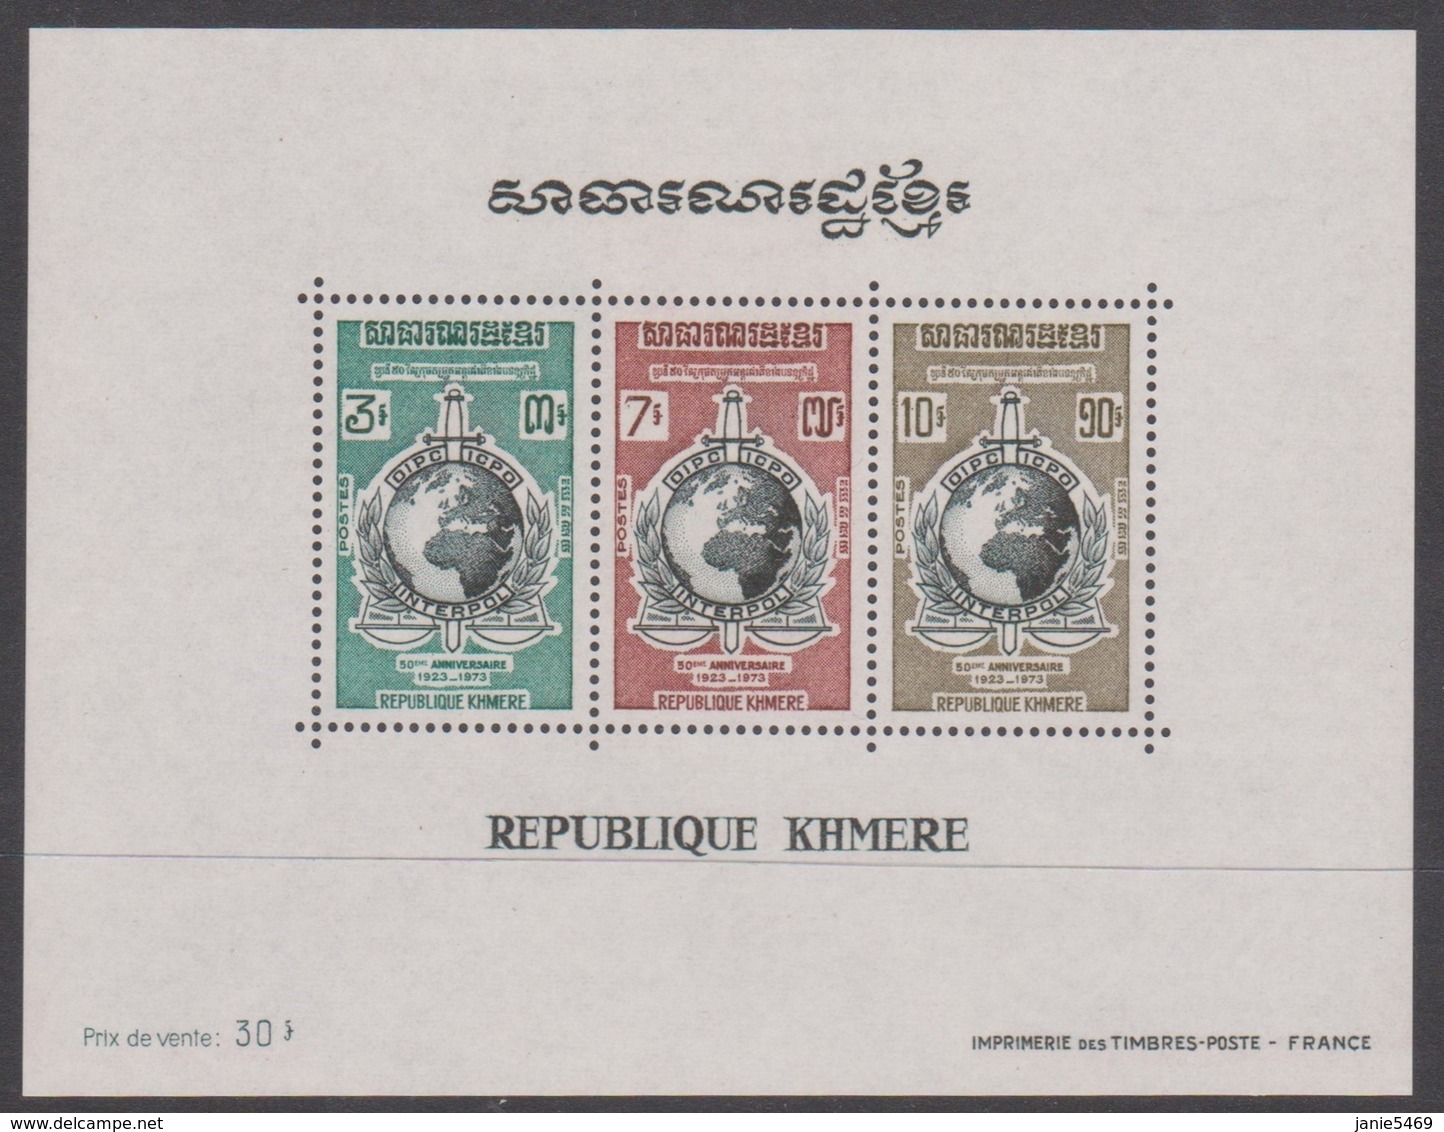 Cambodia Scott 317a 1973 50th Anniversary Of Interpol Souvenir Sheet, Mint Never Hinged - Cambodge